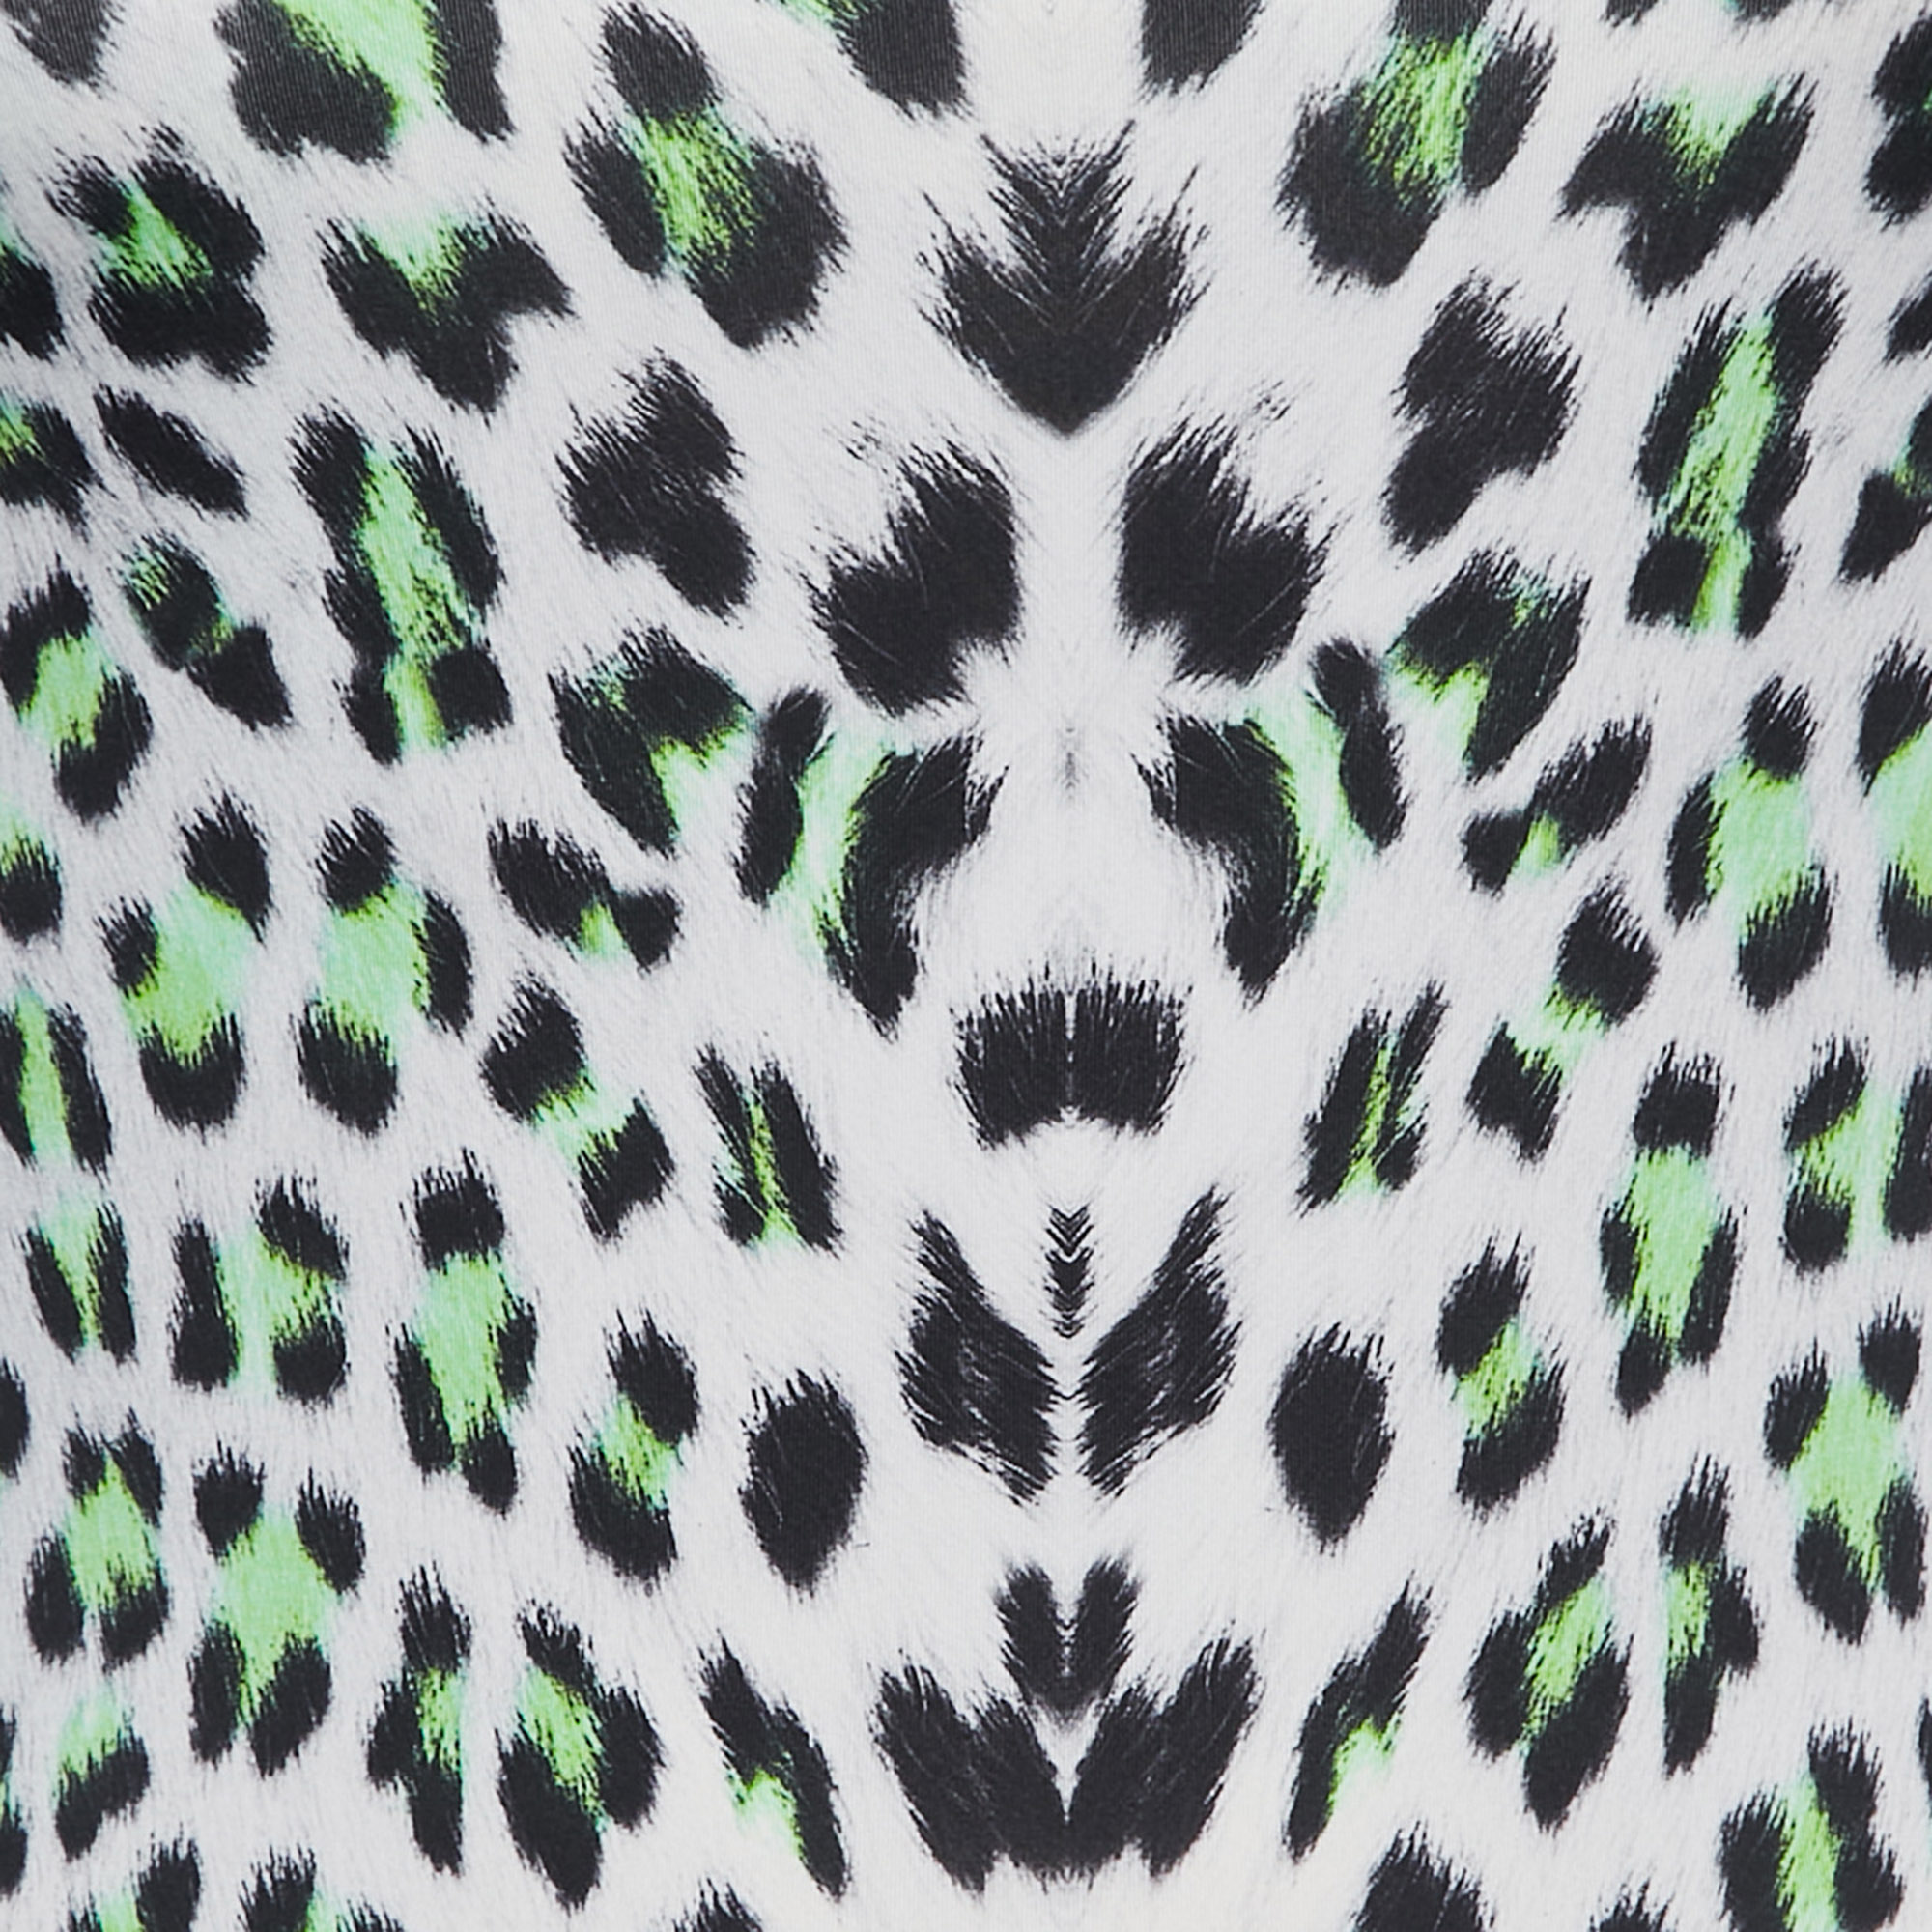 Just Cavalli Multicolor Leopard Print Jersey Short Dress XS